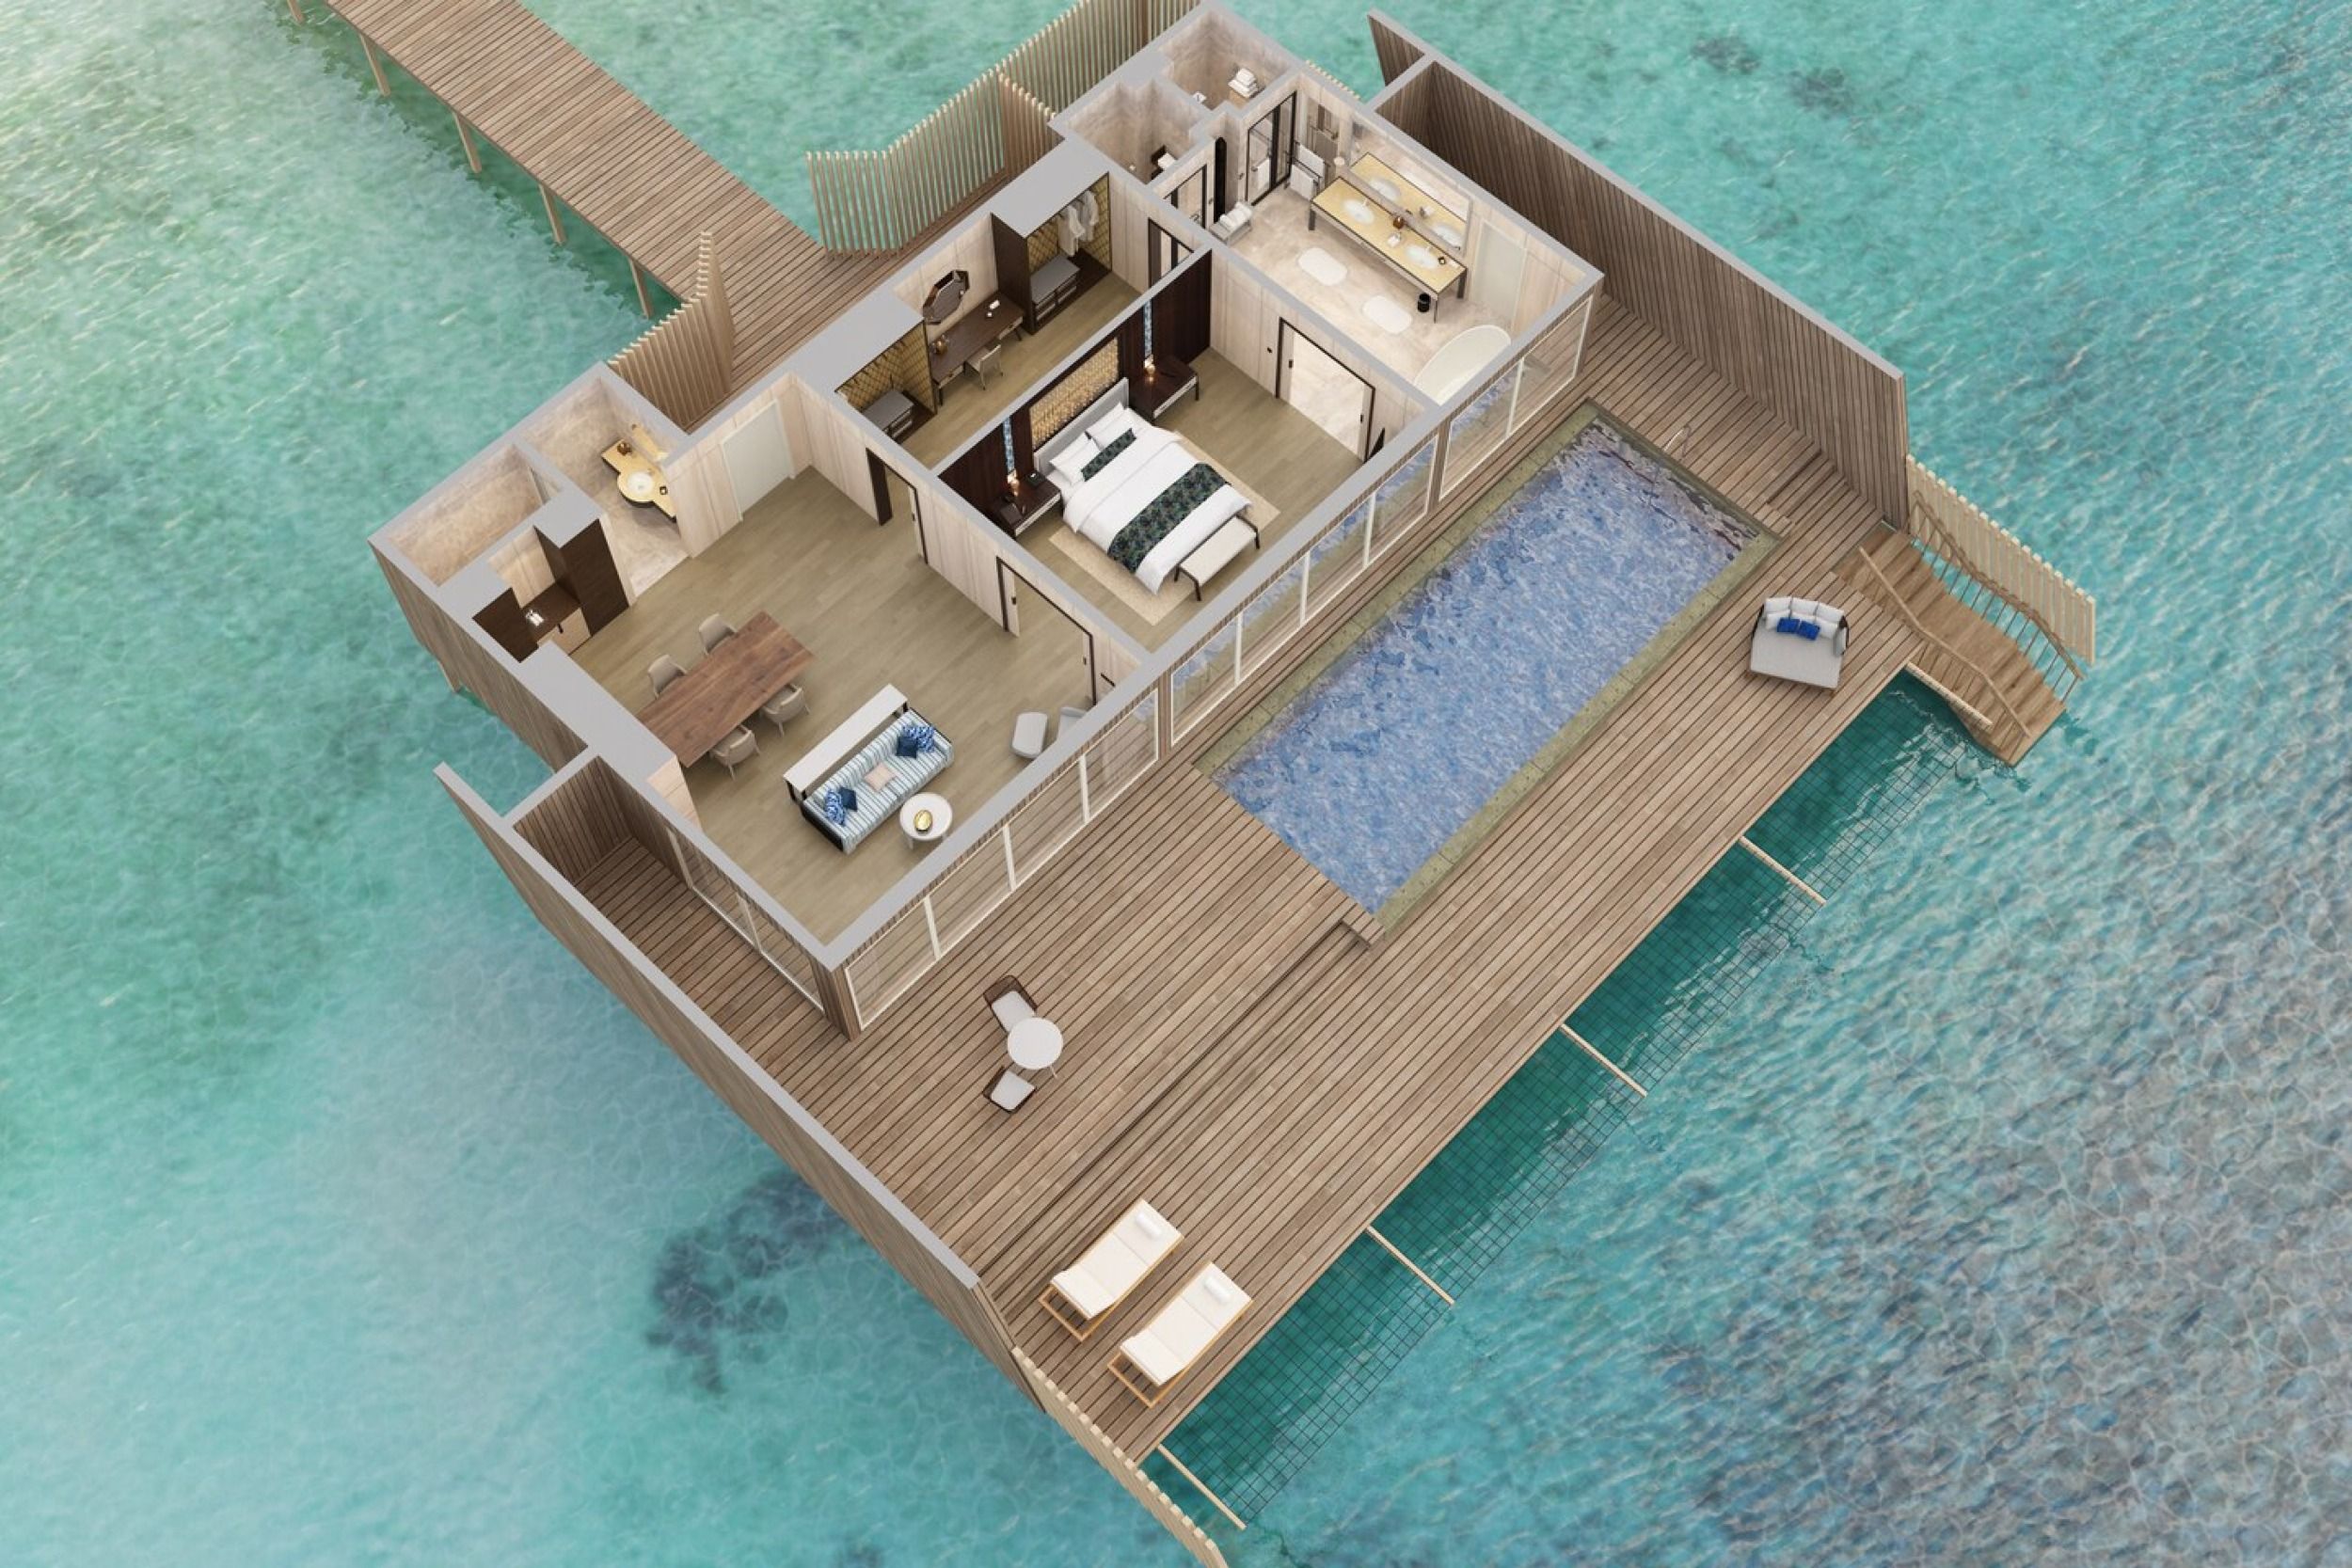 Panoramic Overwater St. Regis Suite with Pool - Floor Plan - The St Regis Maldives Vommuli Resort